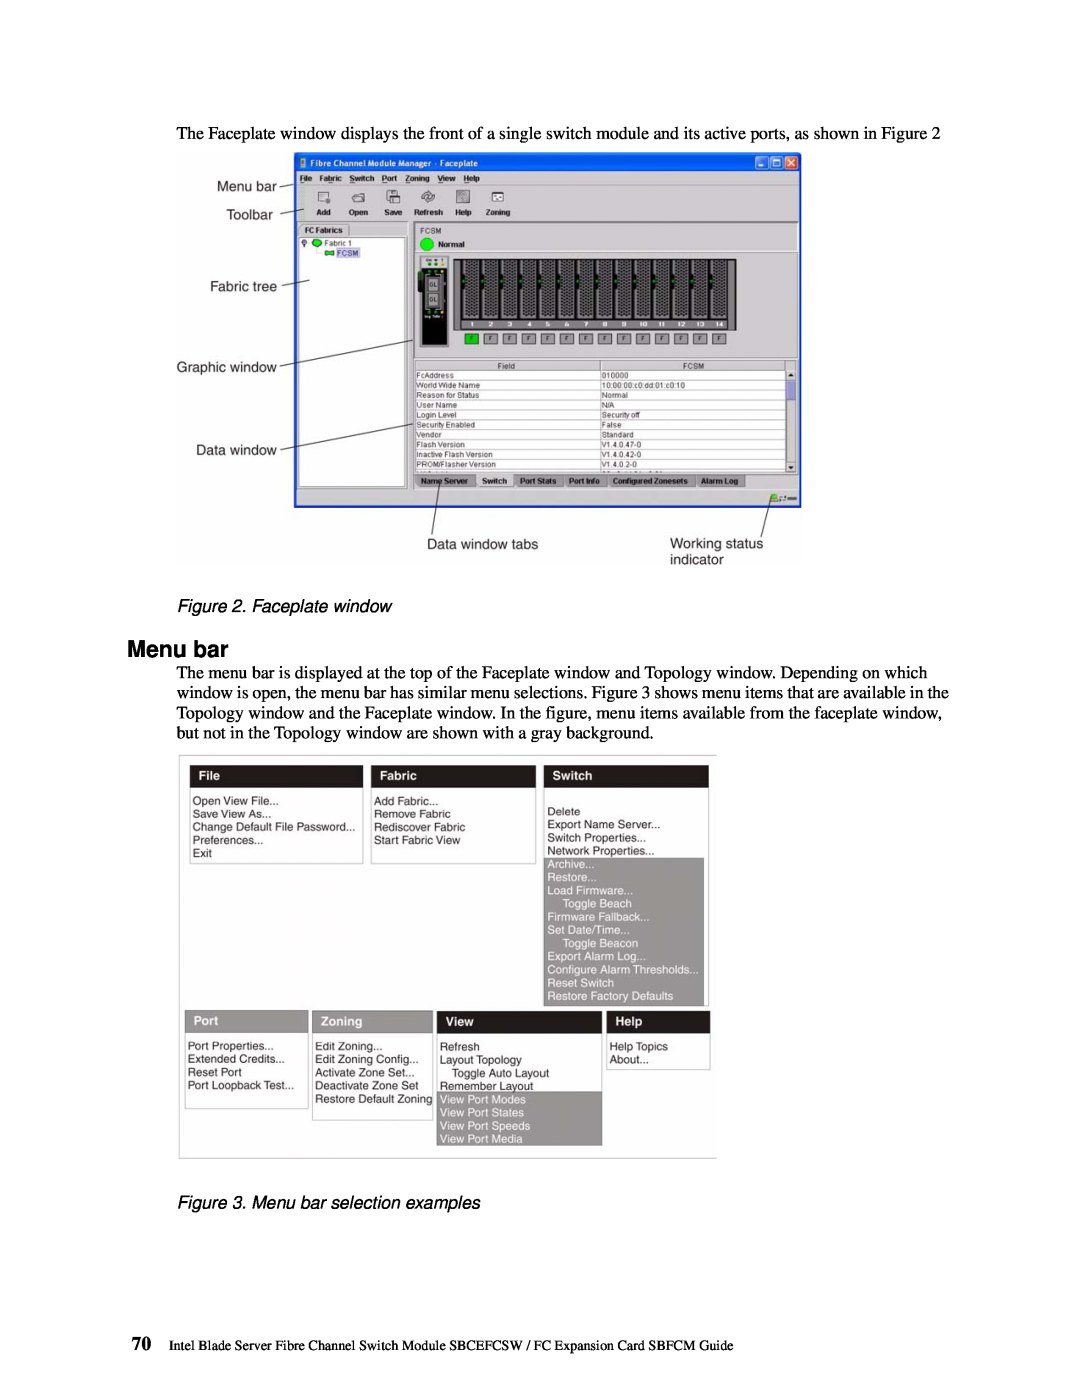 Intel SBFCM, SBCEFCSW manual Faceplate window, Menu bar selection examples 